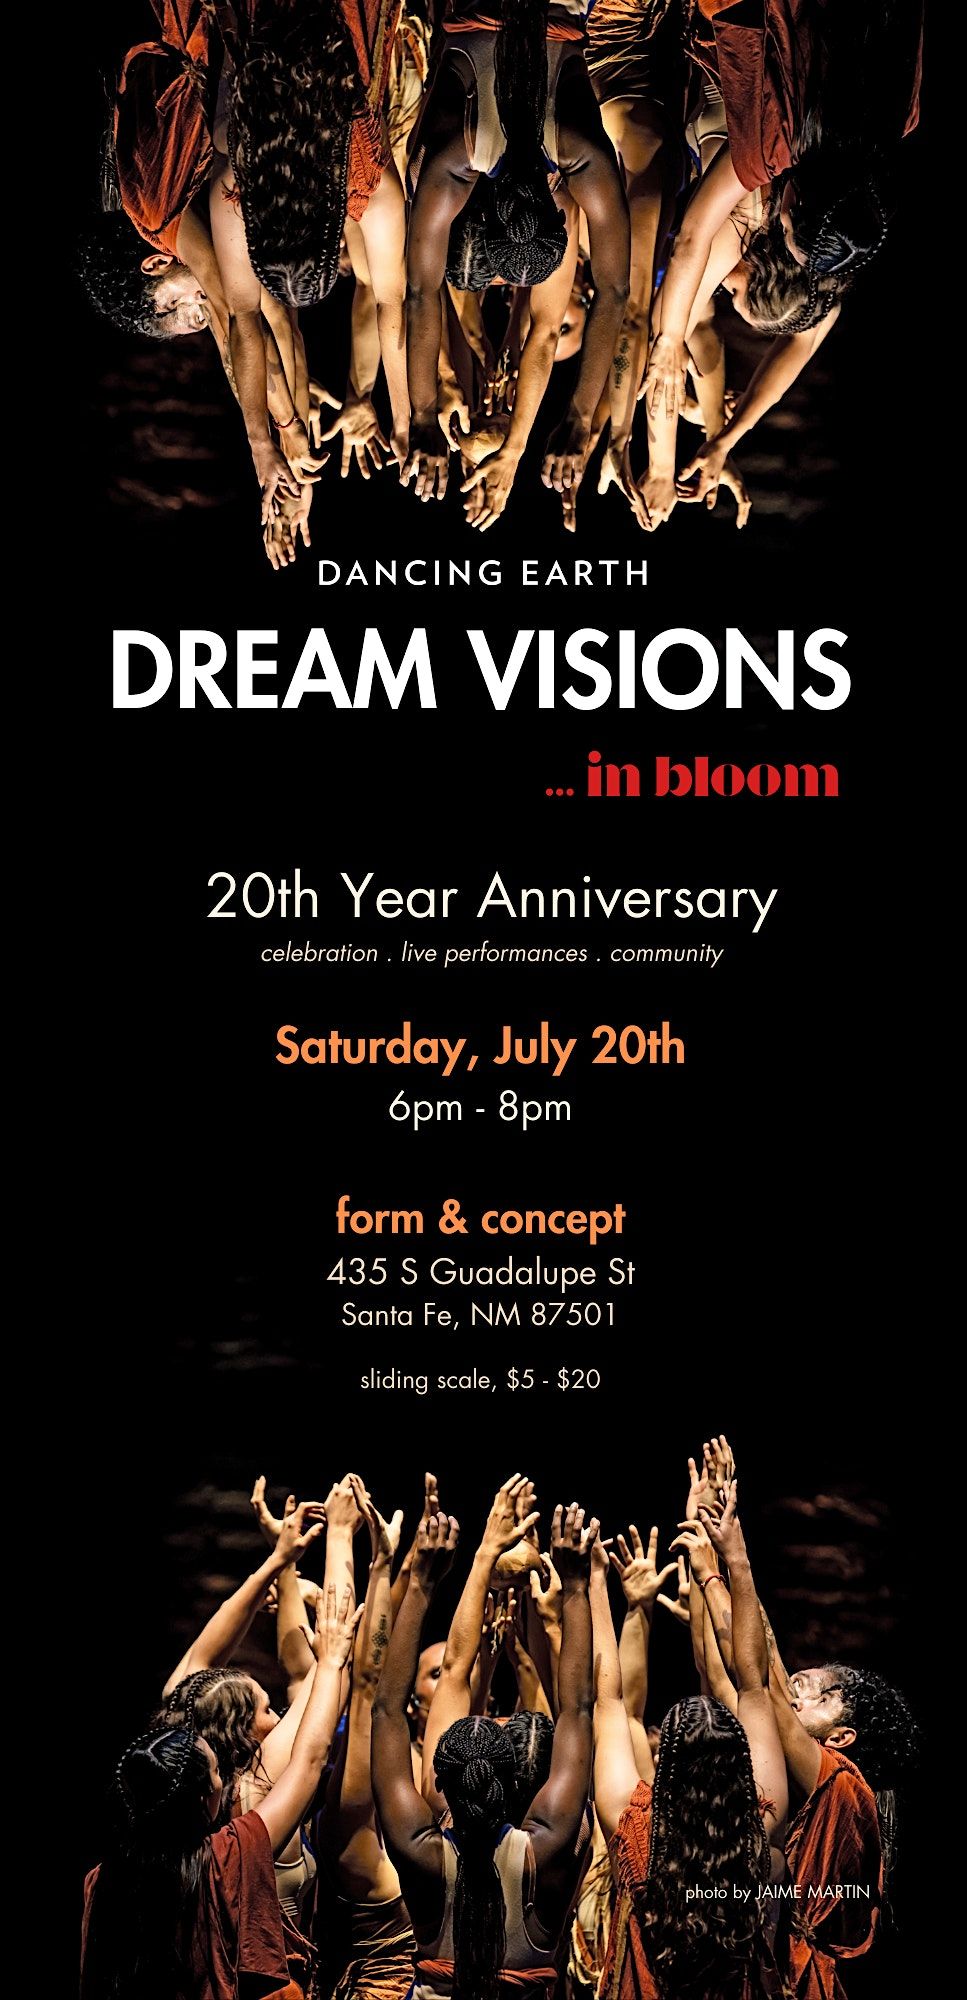 Dancing Earth's 20th Year Anniversary "DREAM VISIONS\u2026 in bloom"